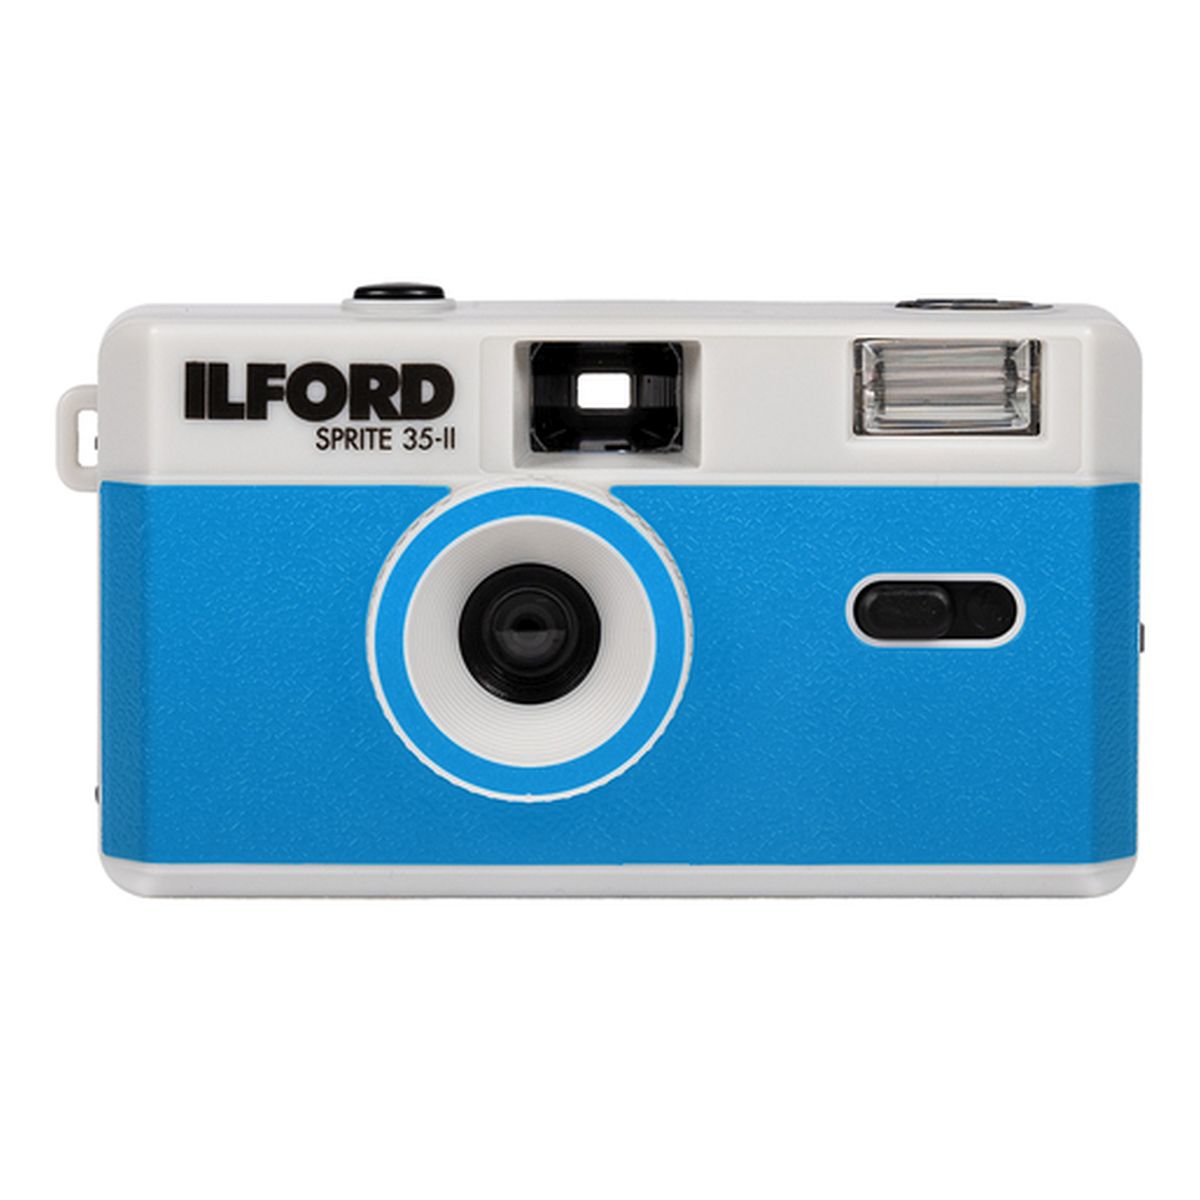 Ilford Sprite 35-II Kamera, blau & silber